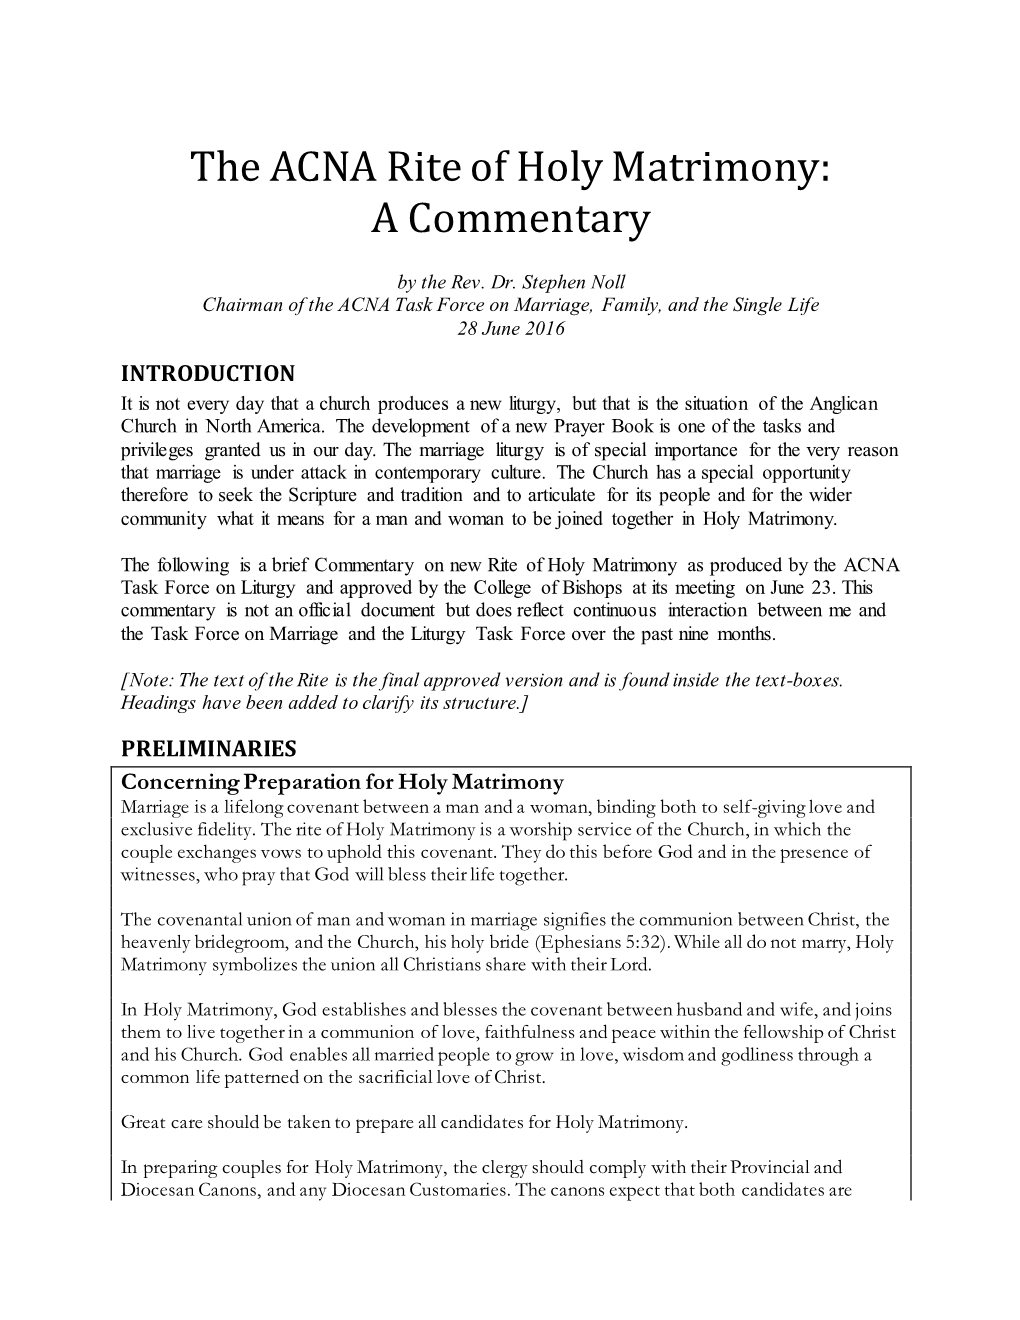 Holy Matrimony: a Commentary